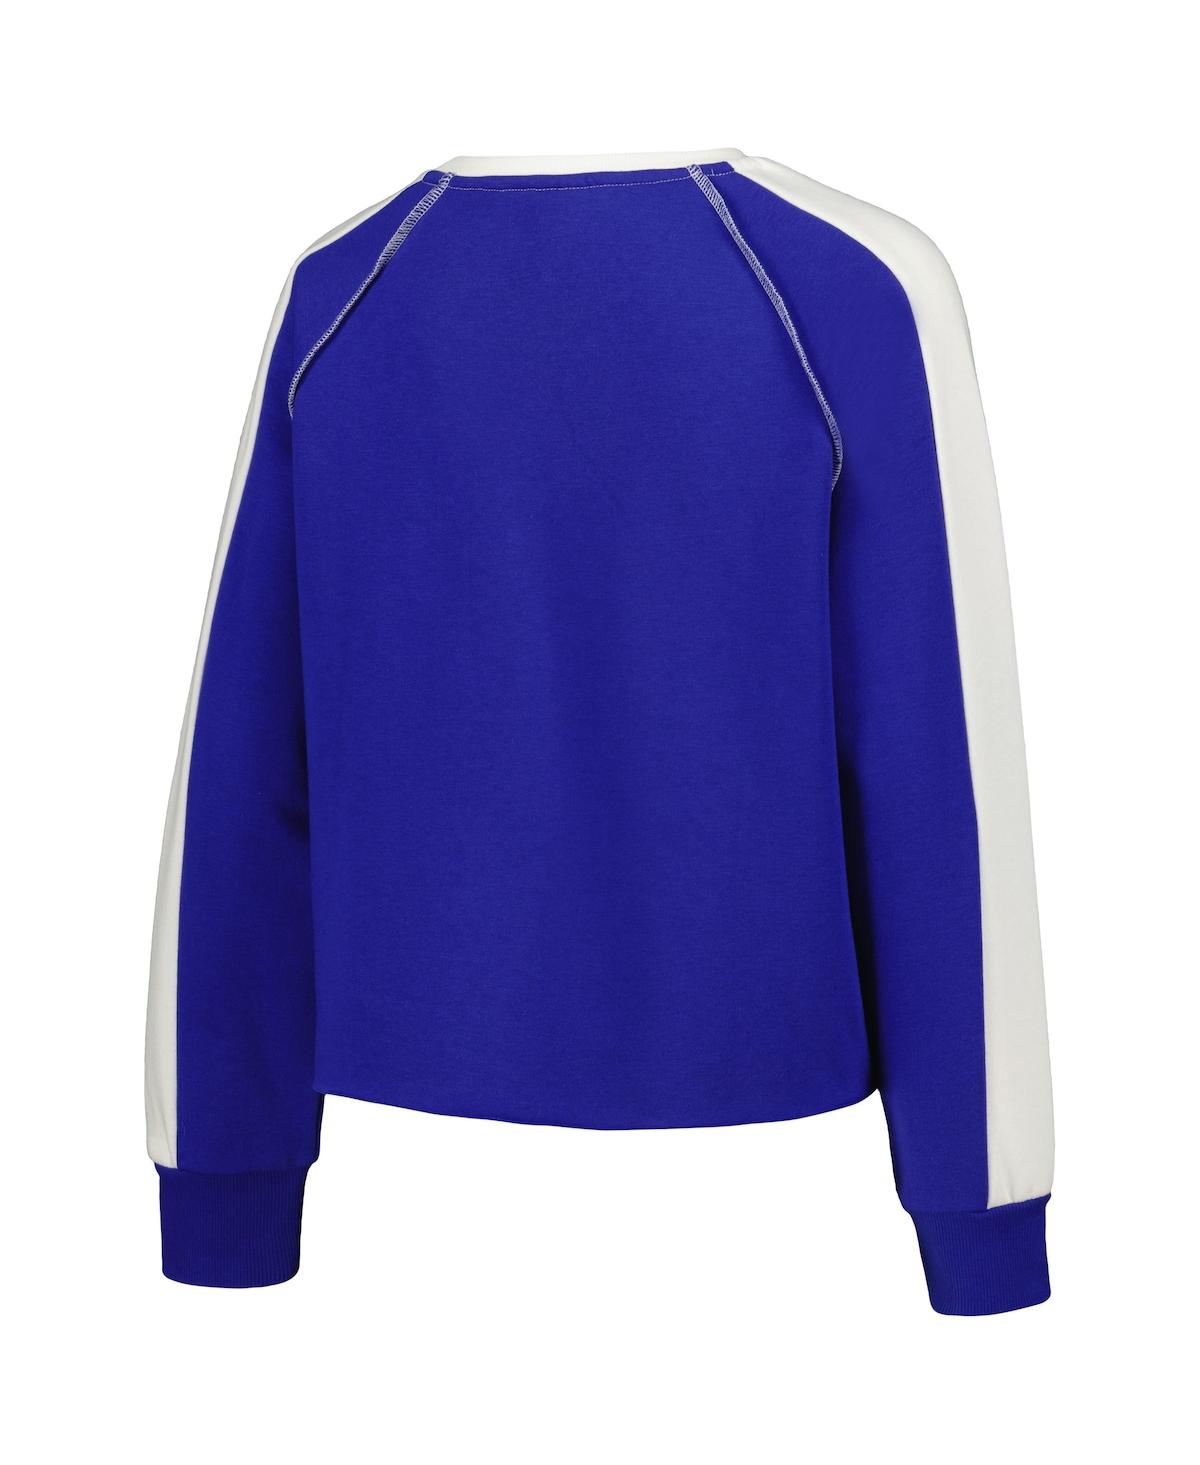 Shop Gameday Couture Women's  Royal Kentucky Wildcats Blindside Raglan Cropped Pullover Sweatshirt